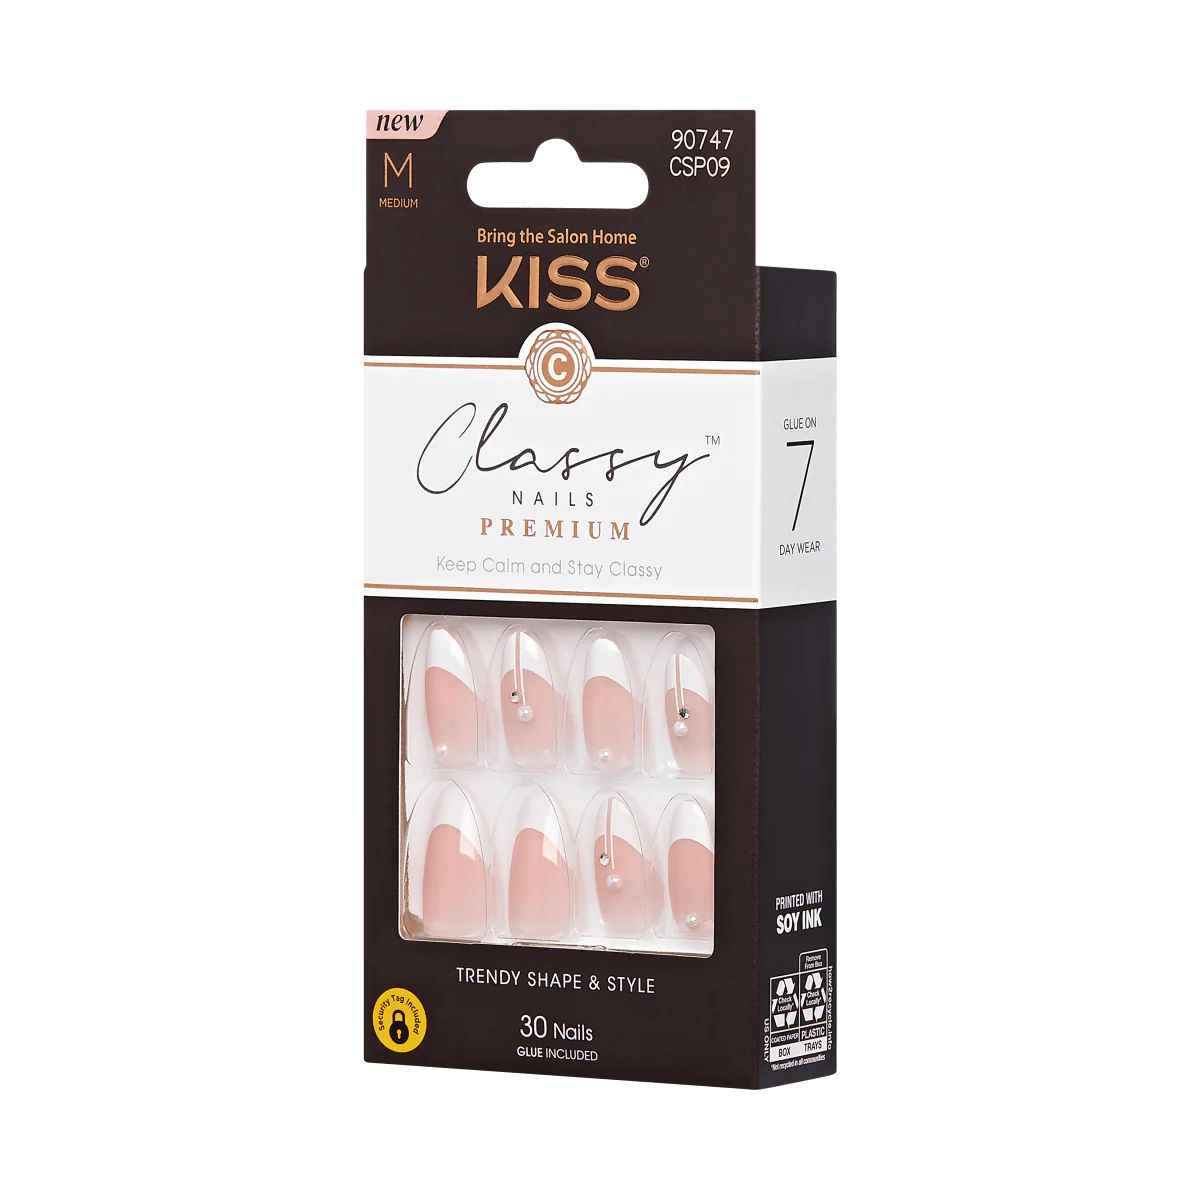 KISS Premium Classy Press-On Nails, White Tipped French, Medium, Almond Shape, 33 Ct. | KISS, imPRESS, JOAH